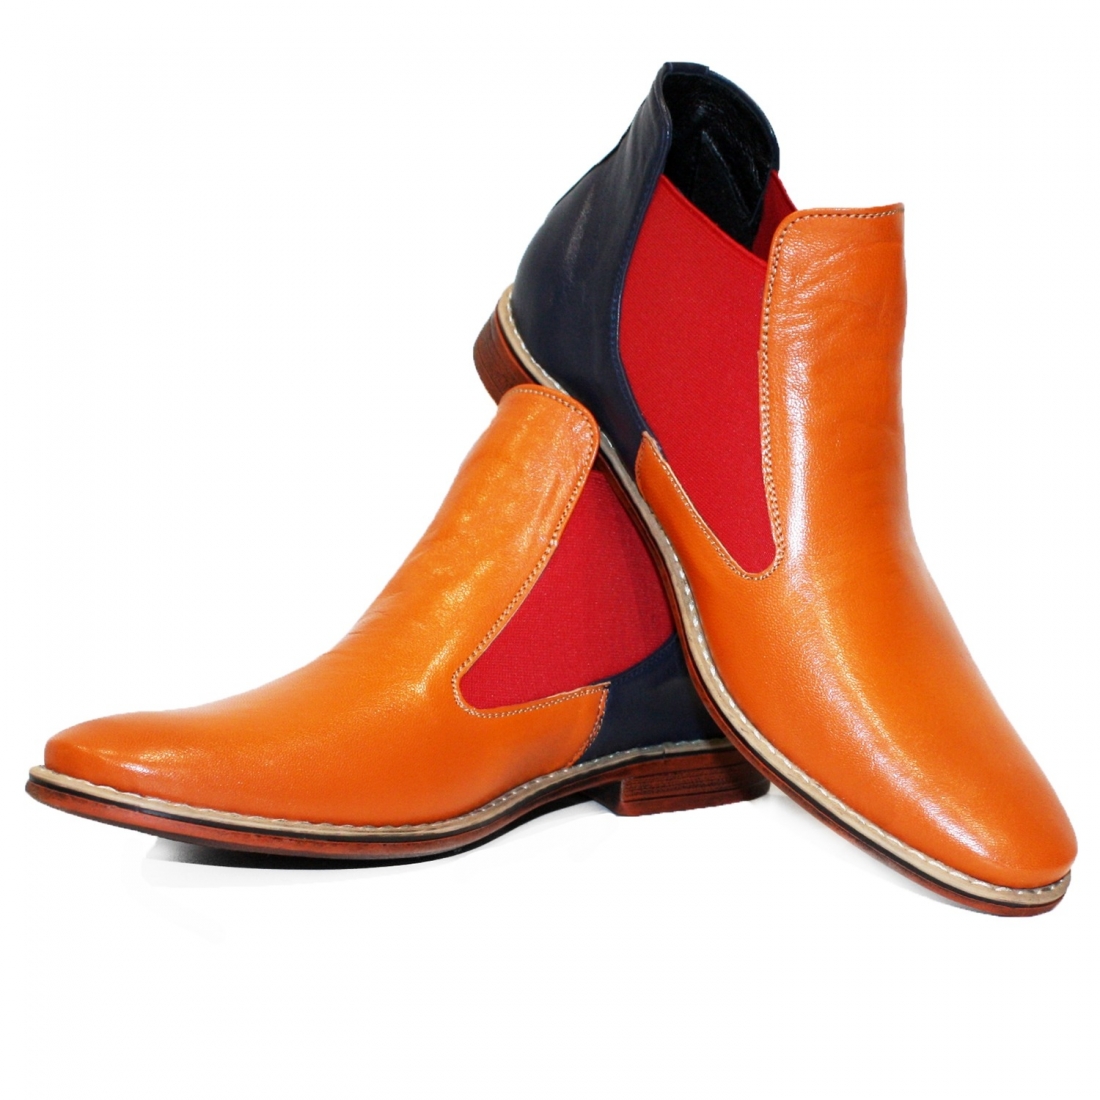 Modello Mixerro - Chelsea Boots - Handmade Colorful Italian Leather Shoes